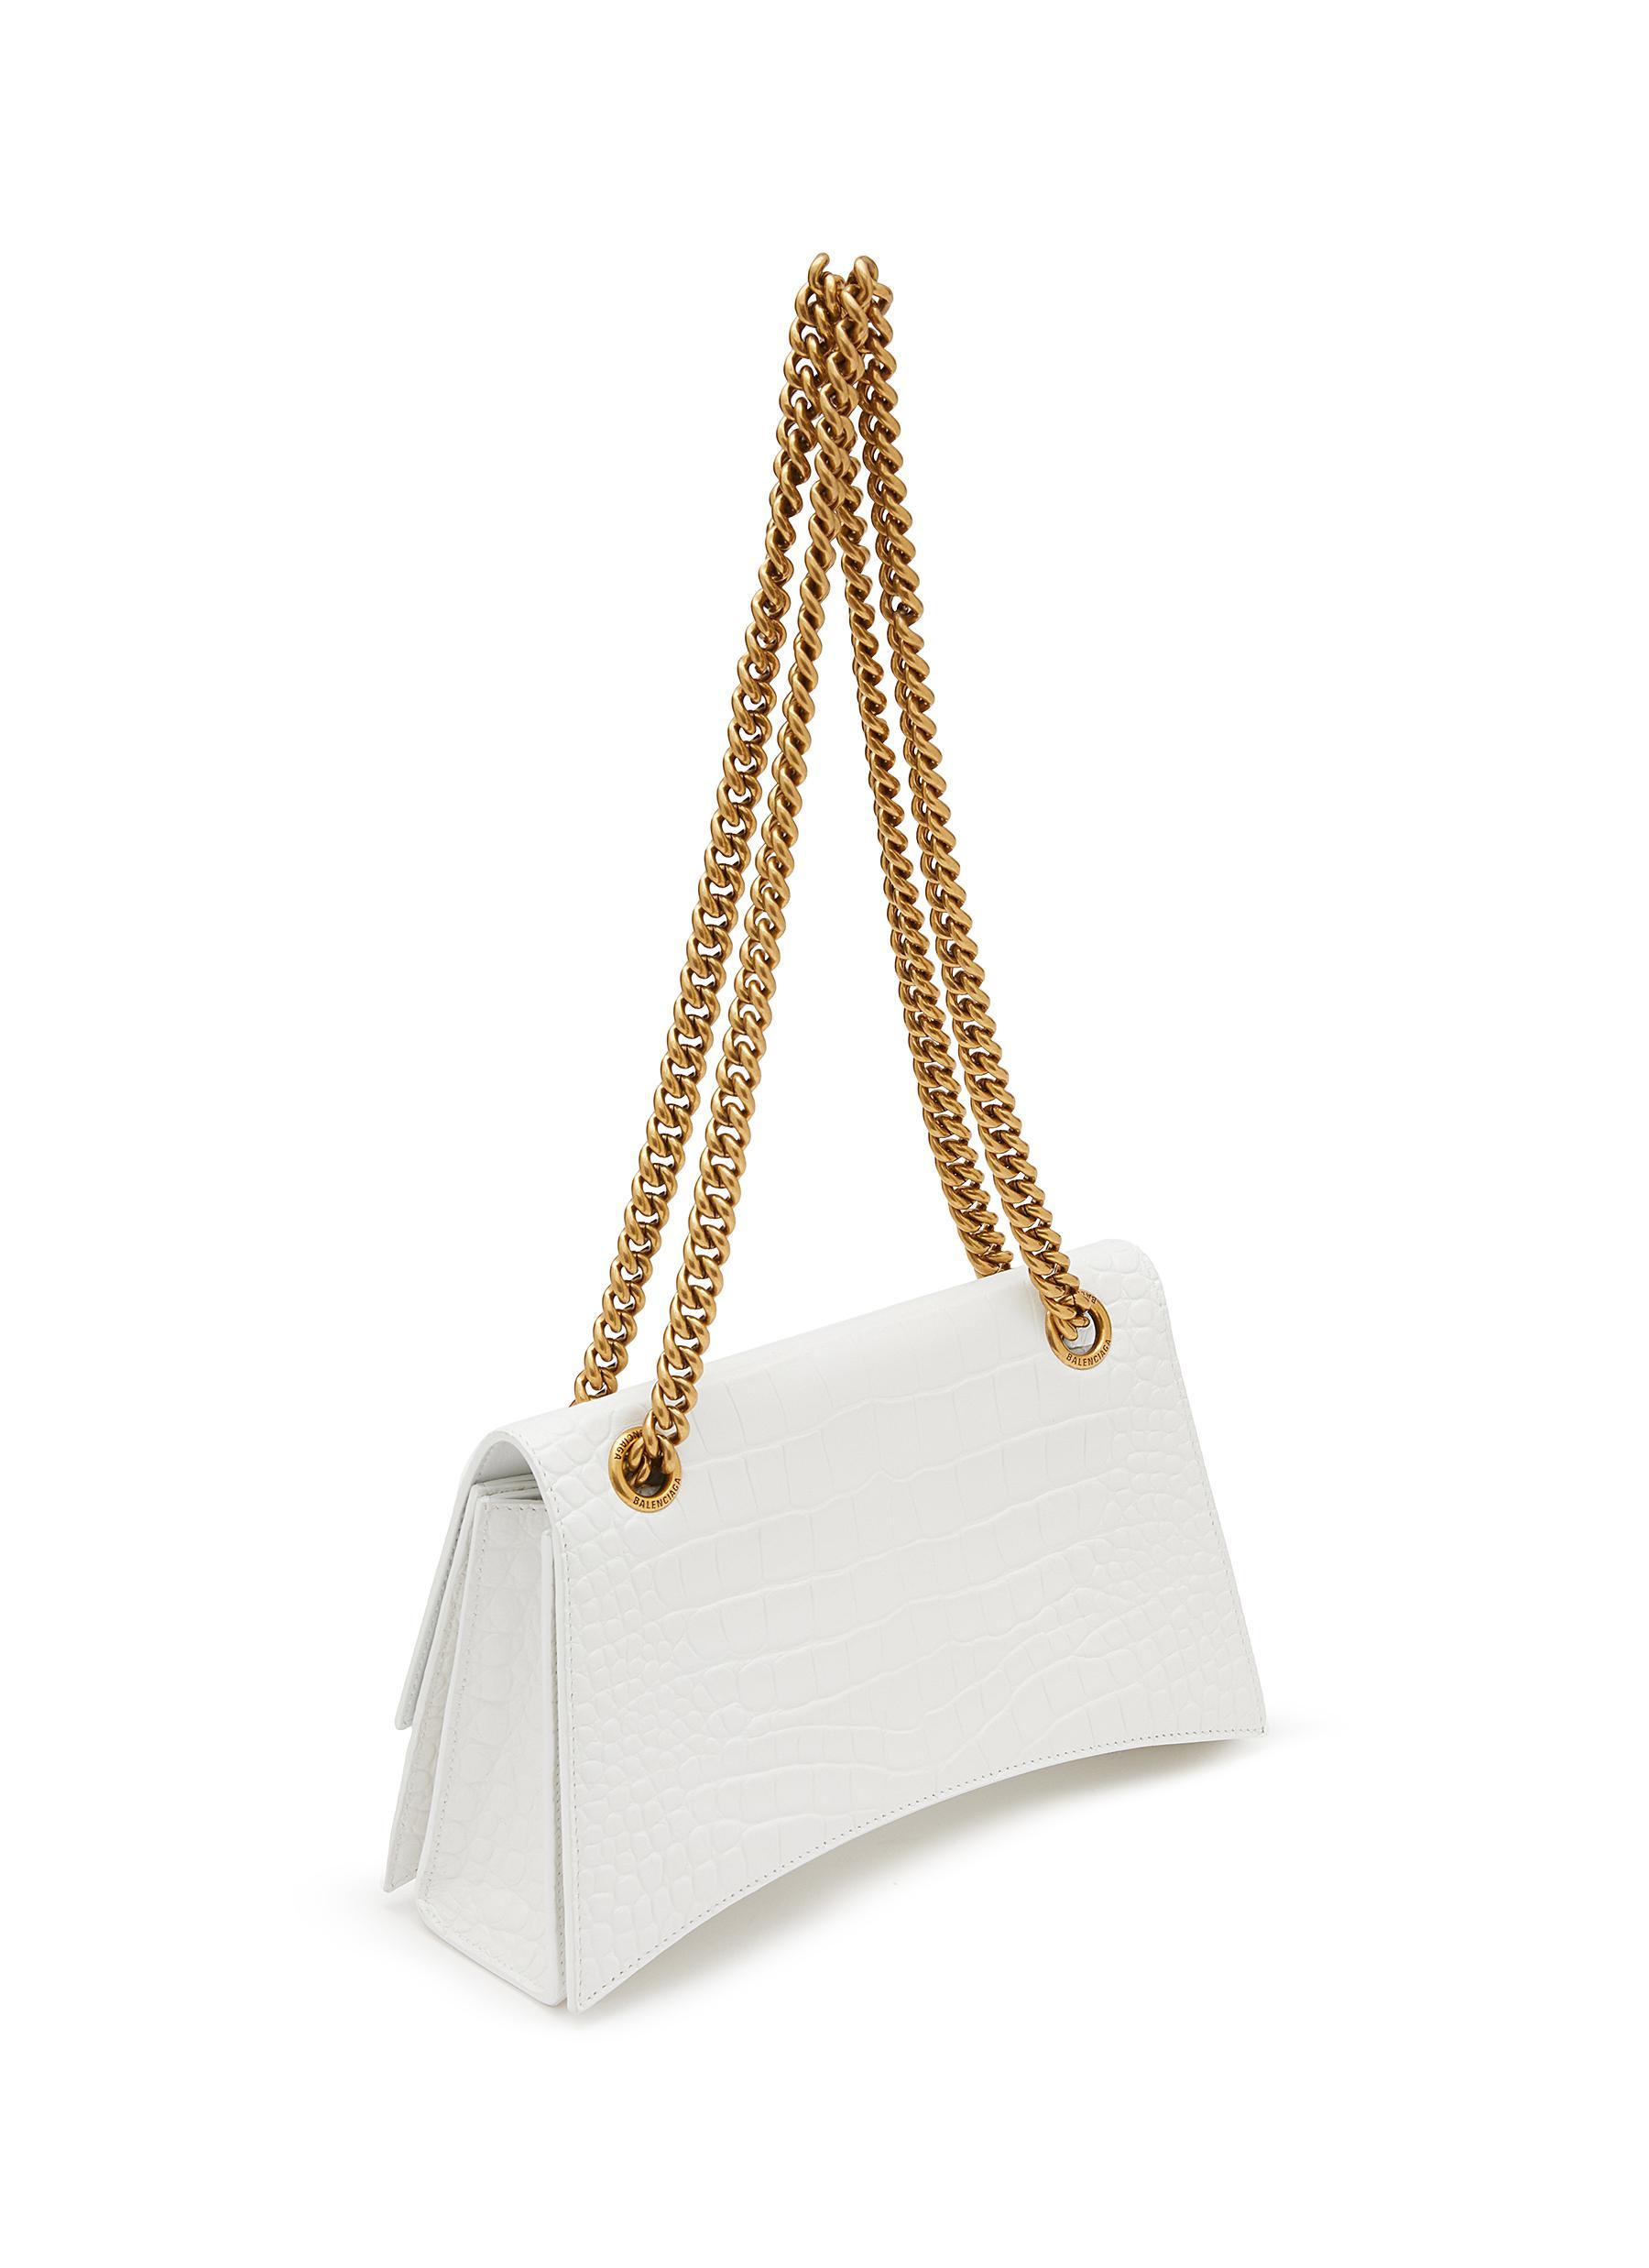 Balenciaga Small Crush Chain Shoulder Bag in Silver